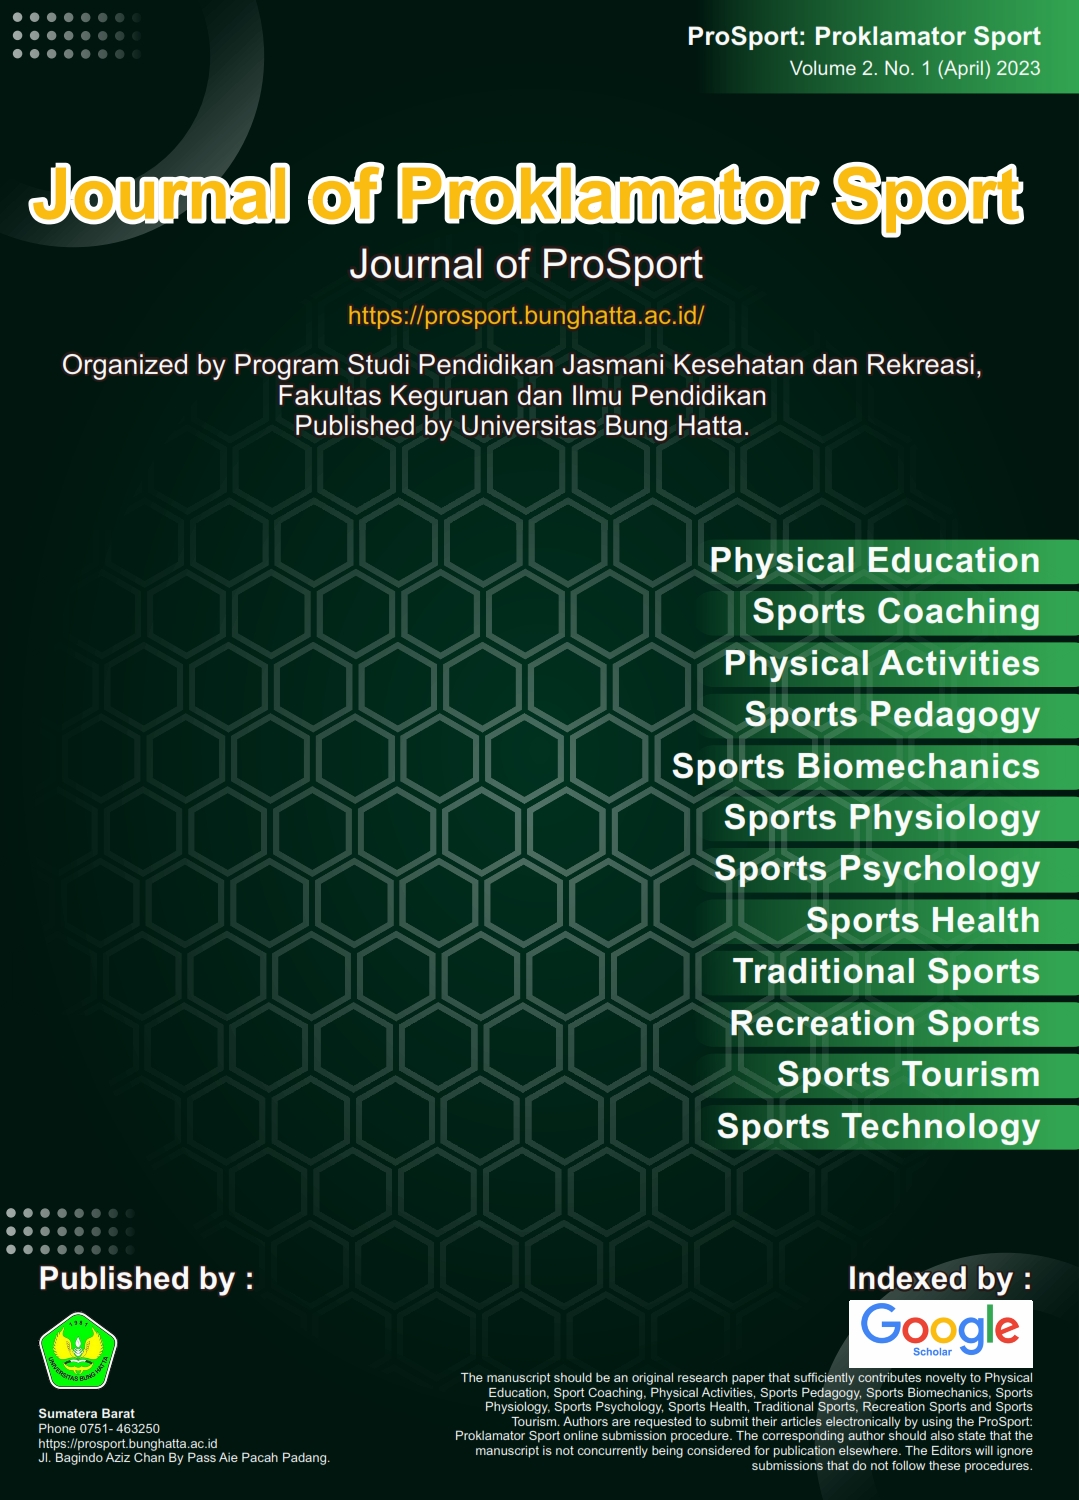 ProSport : Proklamator Sport, Vol 2 No 1, April 2023